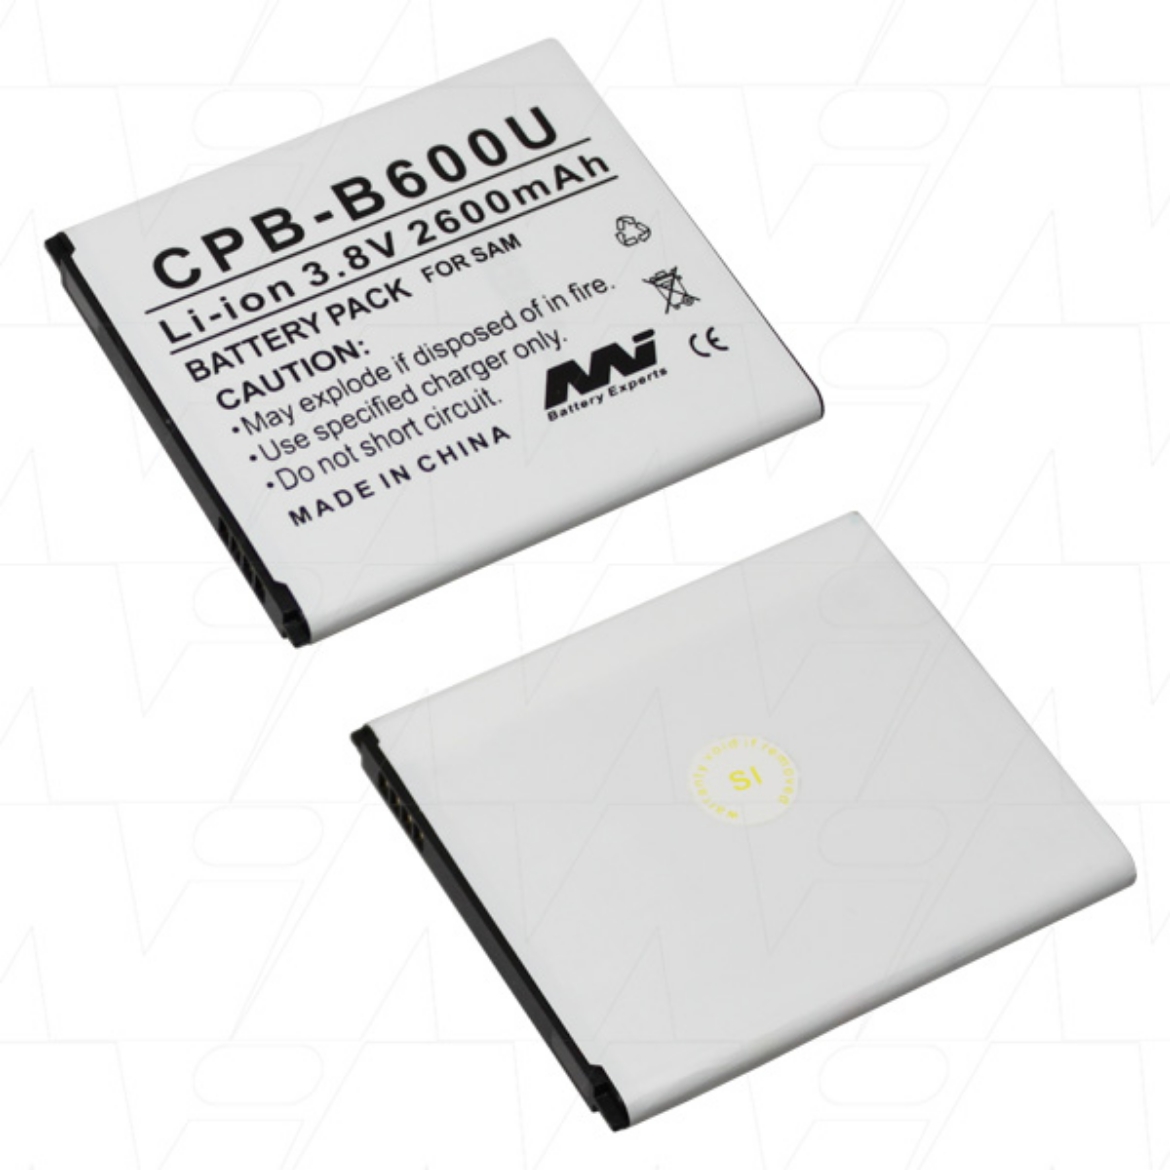 Picture of CPB-B600U-BP1 SAMSUNG GALAXY S4 MOBILE PHONE BATTERY 3.7V 2600MAH LI-ION - B600BE